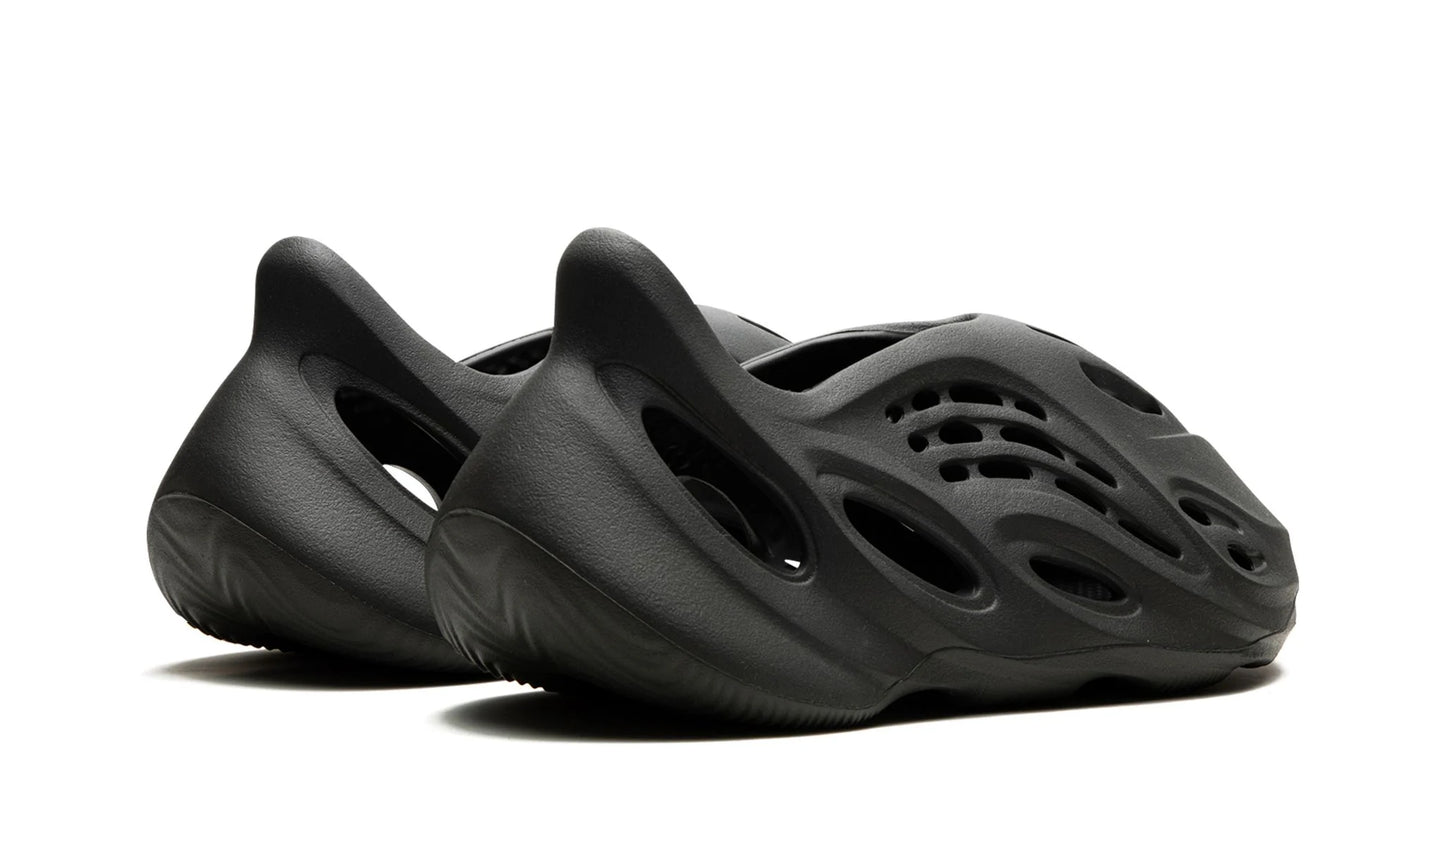 adidas Yeezy Foam Runner 'Carbon'